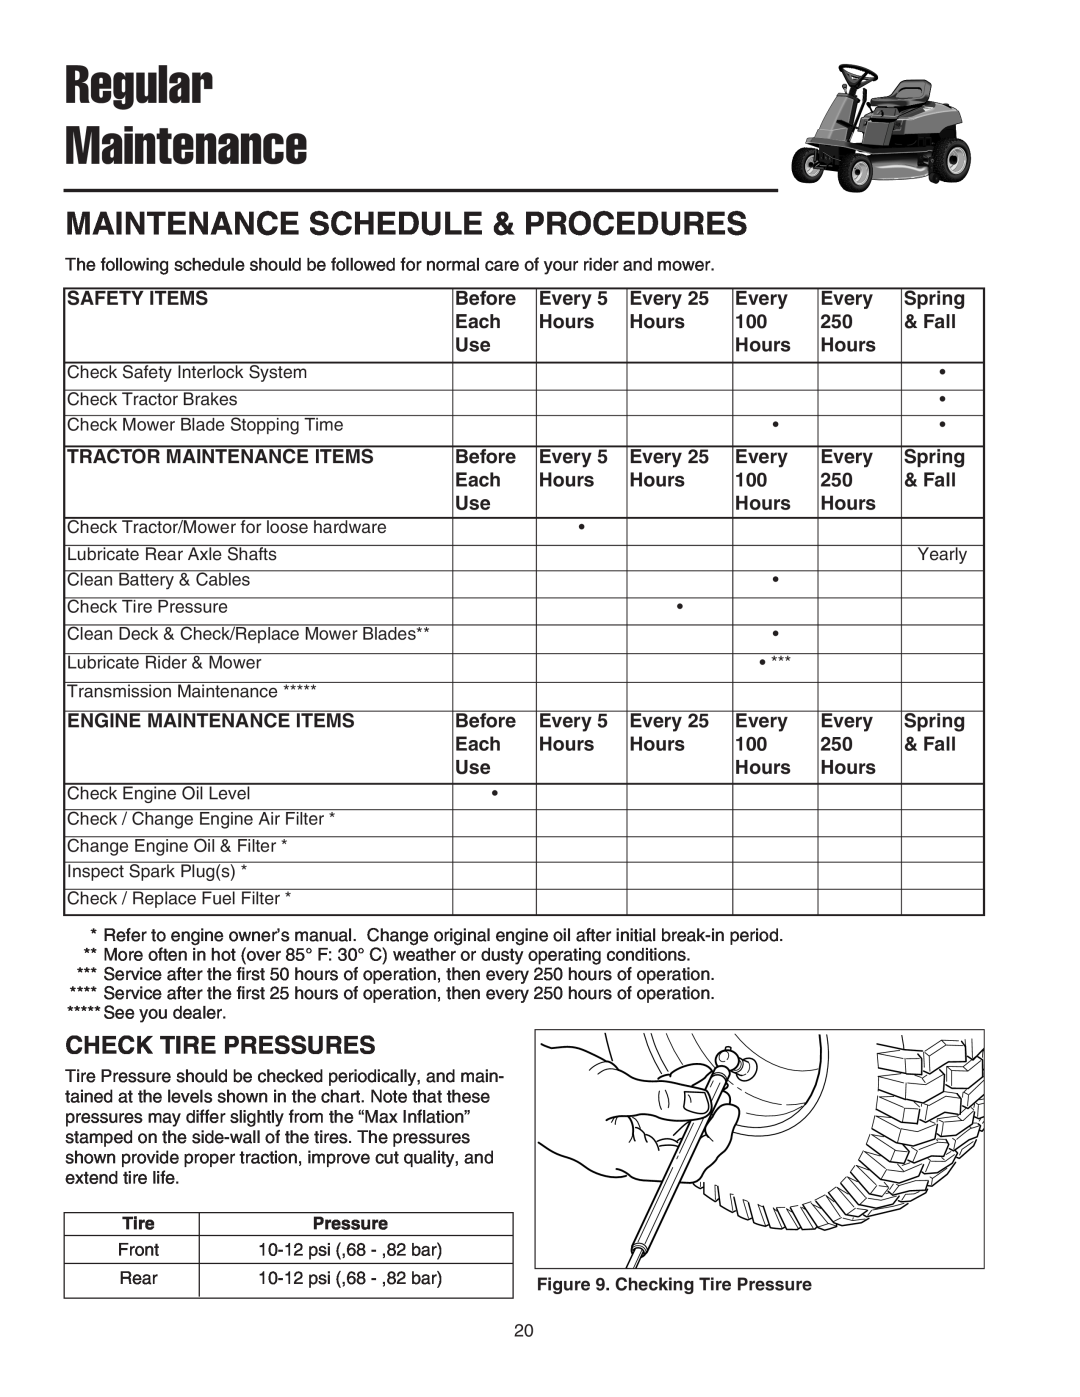 Snapper RE 200 manual Regular Maintenance, Maintenance Schedule & Procedures, Check Tire Pressures 